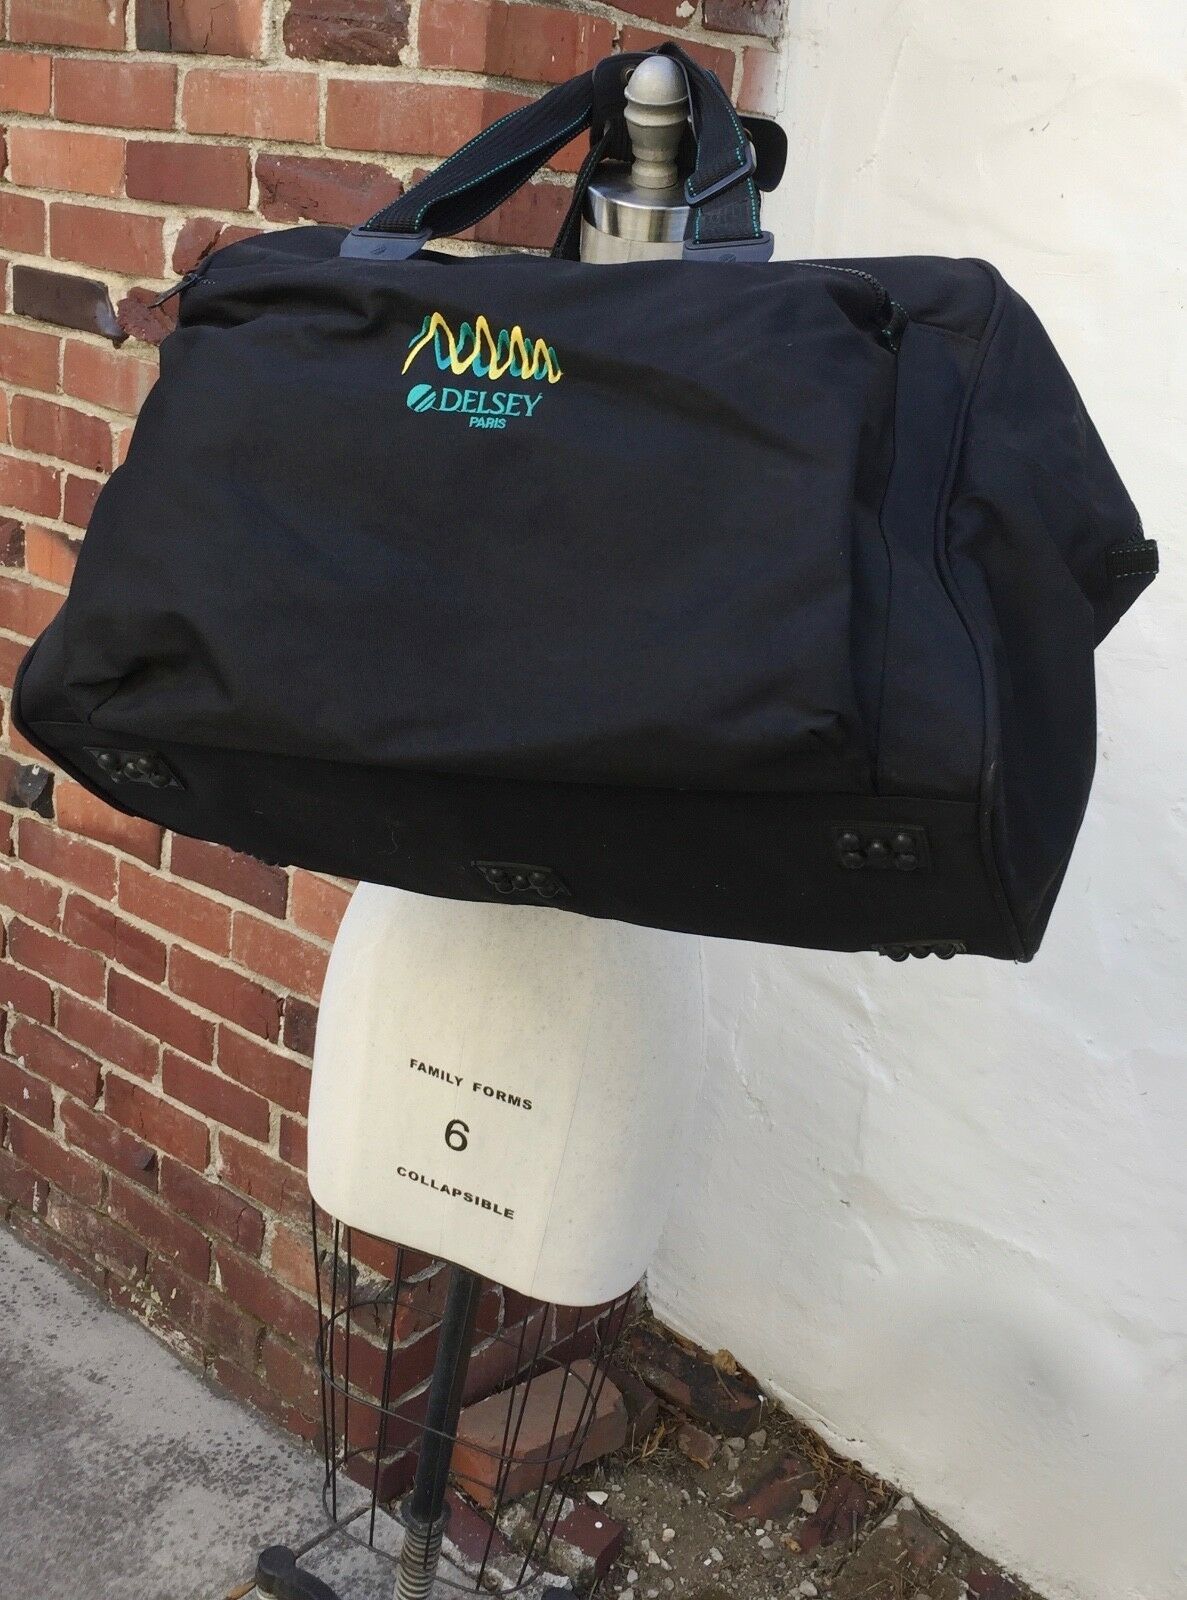 DELSEY PARIS black BIG Duffle Bag large Travel Nylon Carry On - $33.66